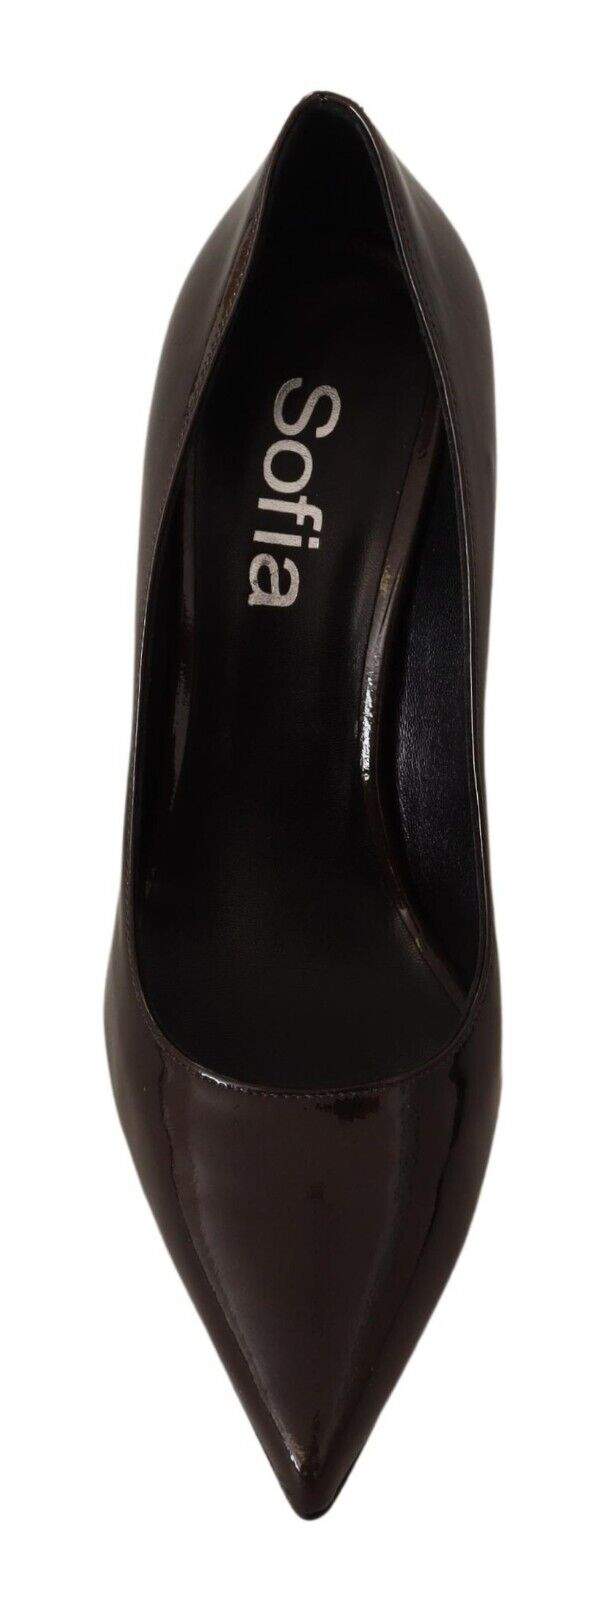 SOFIA Brown Patent Leather Stiletto Heels Pumps Shoes Brown, EU37.5/US7, EU39/US8.5, feed-1, Pumps - Women - Shoes, SOFIA at SEYMAYKA